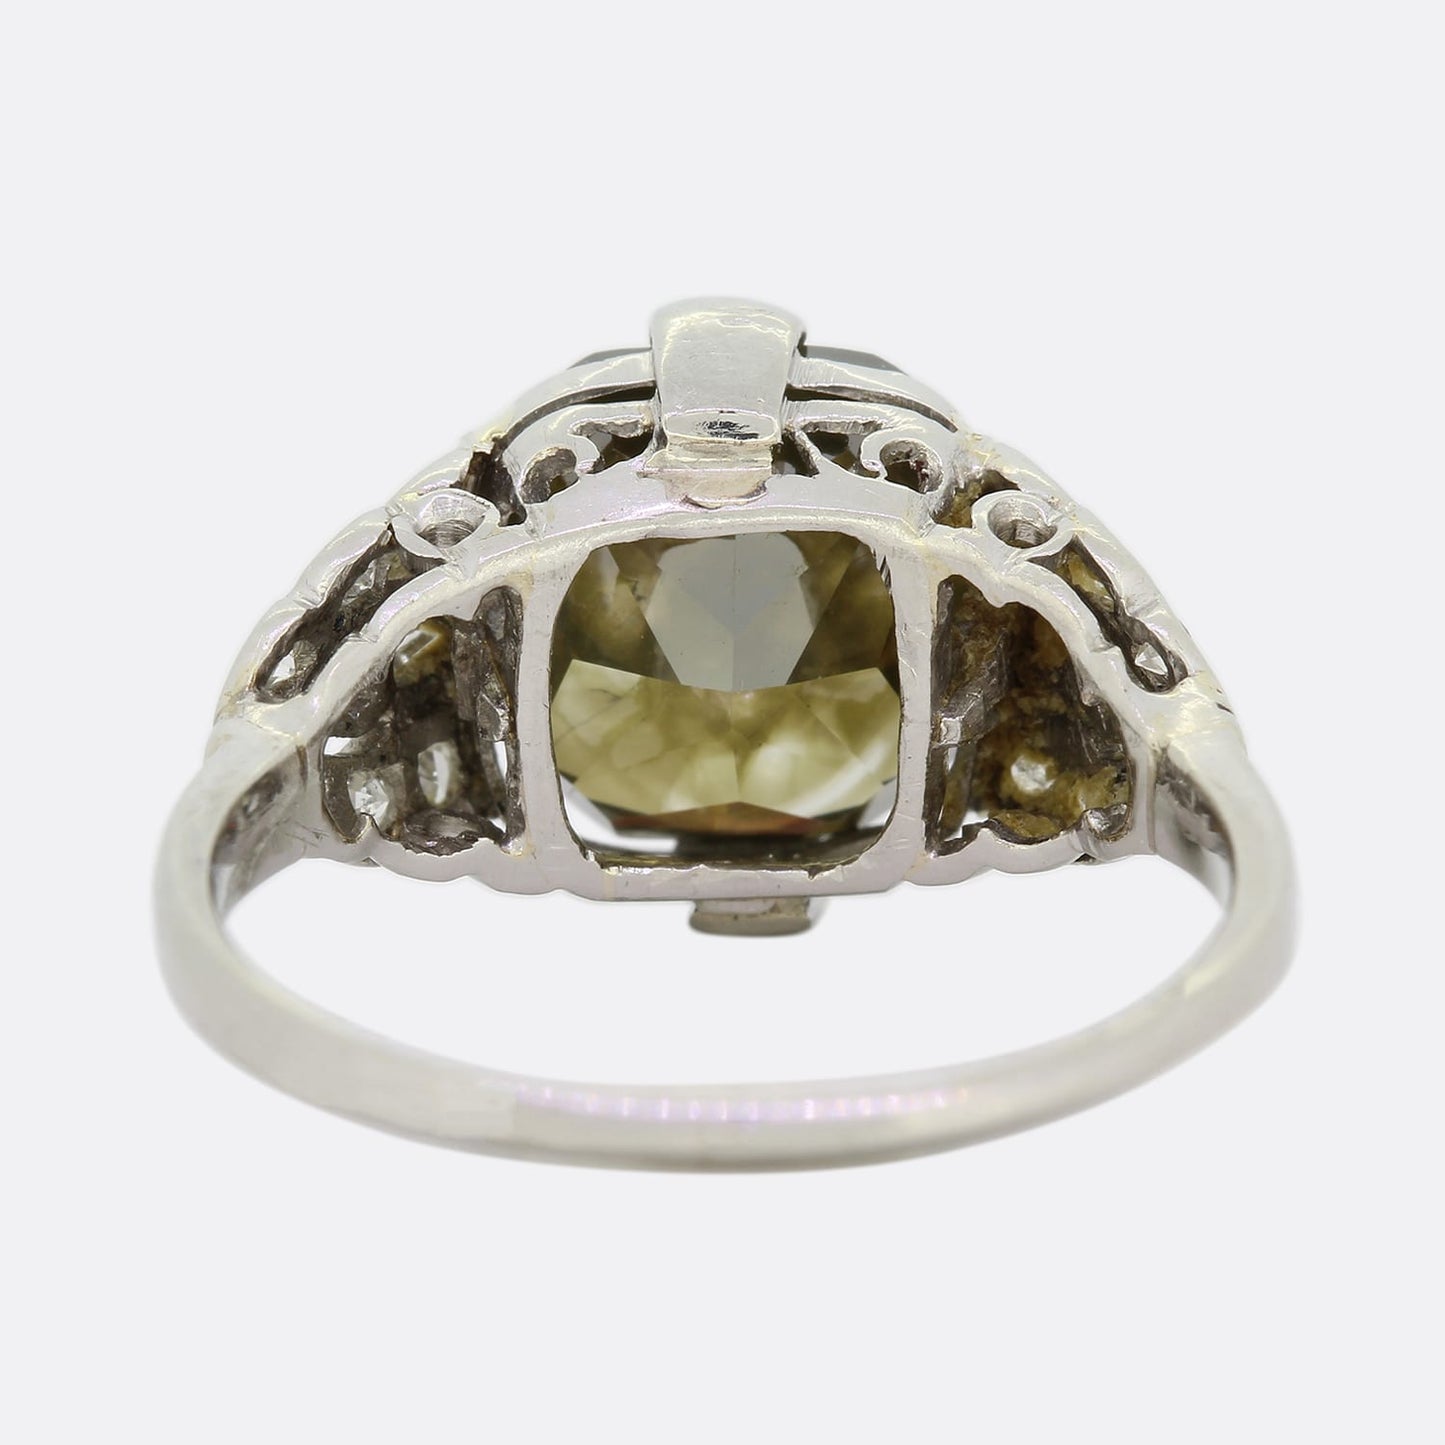 Art Deco 4.01 Carat Fancy Dark Yellow Grey Cushion Cut Diamond Ring